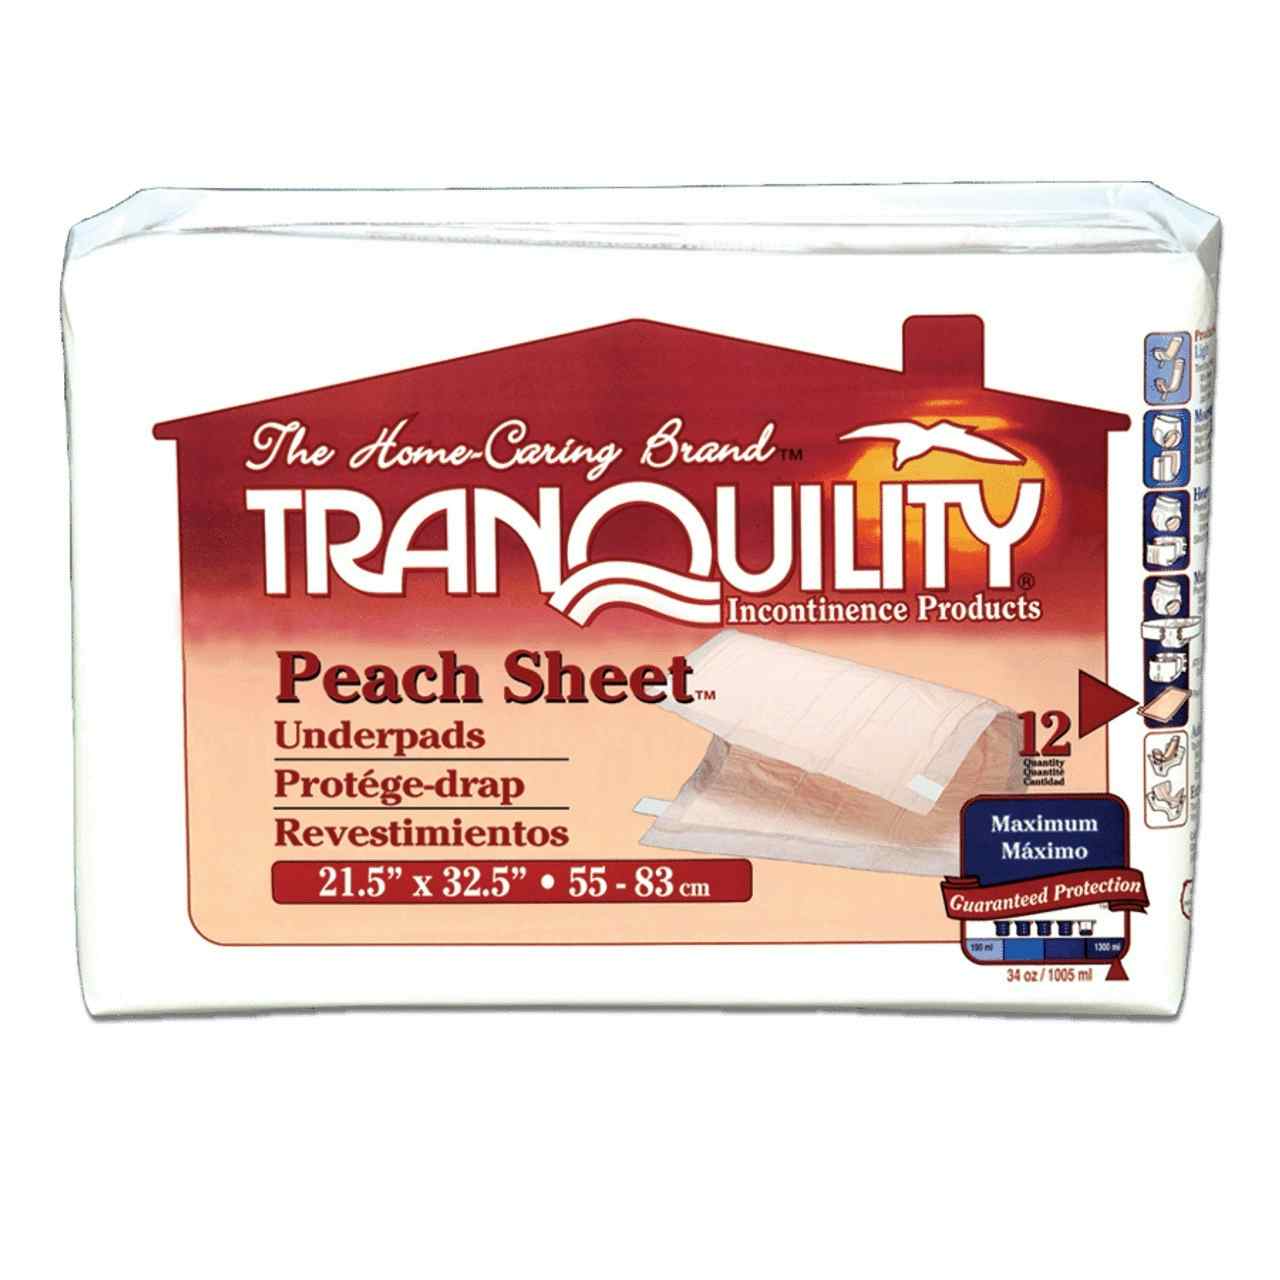 Tranquility Peach Sheet Underpads, Maximum